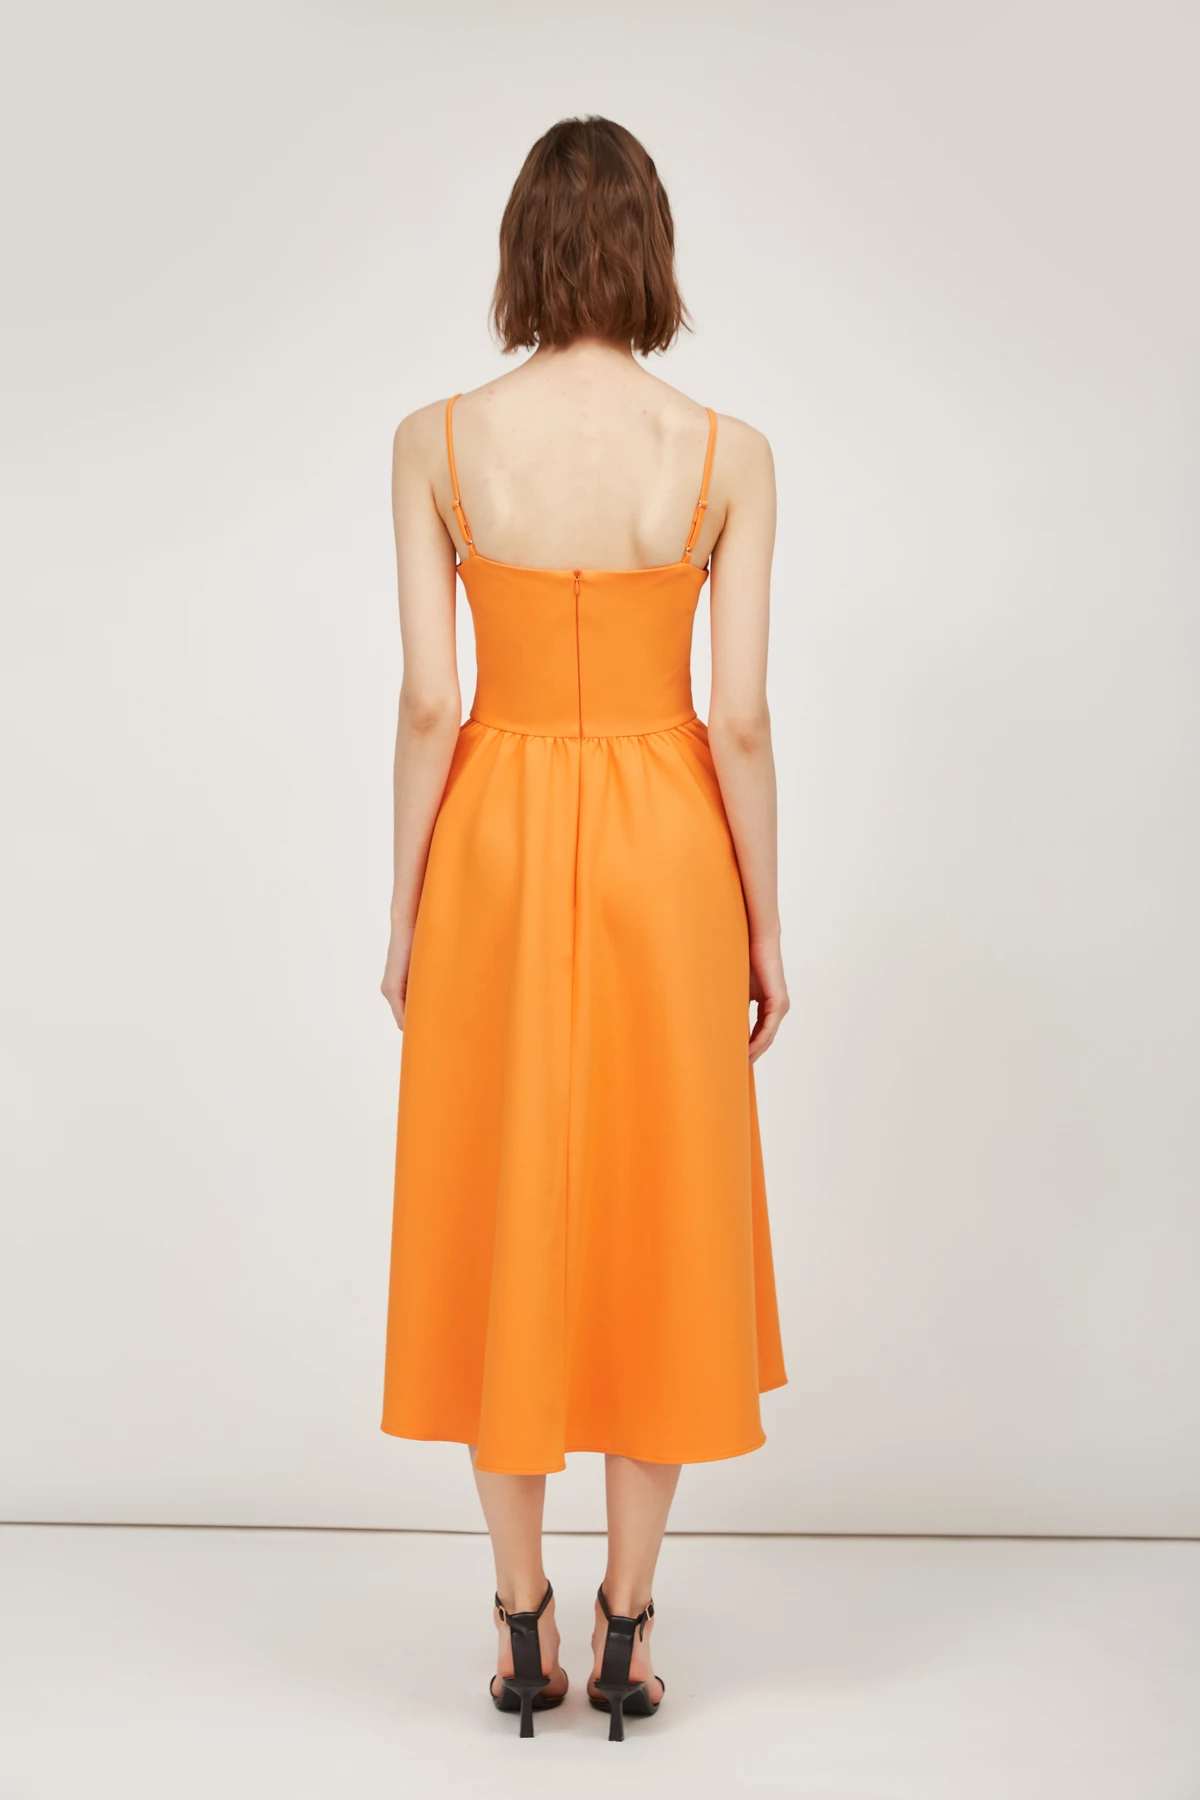 Orange midi dress, photo 5